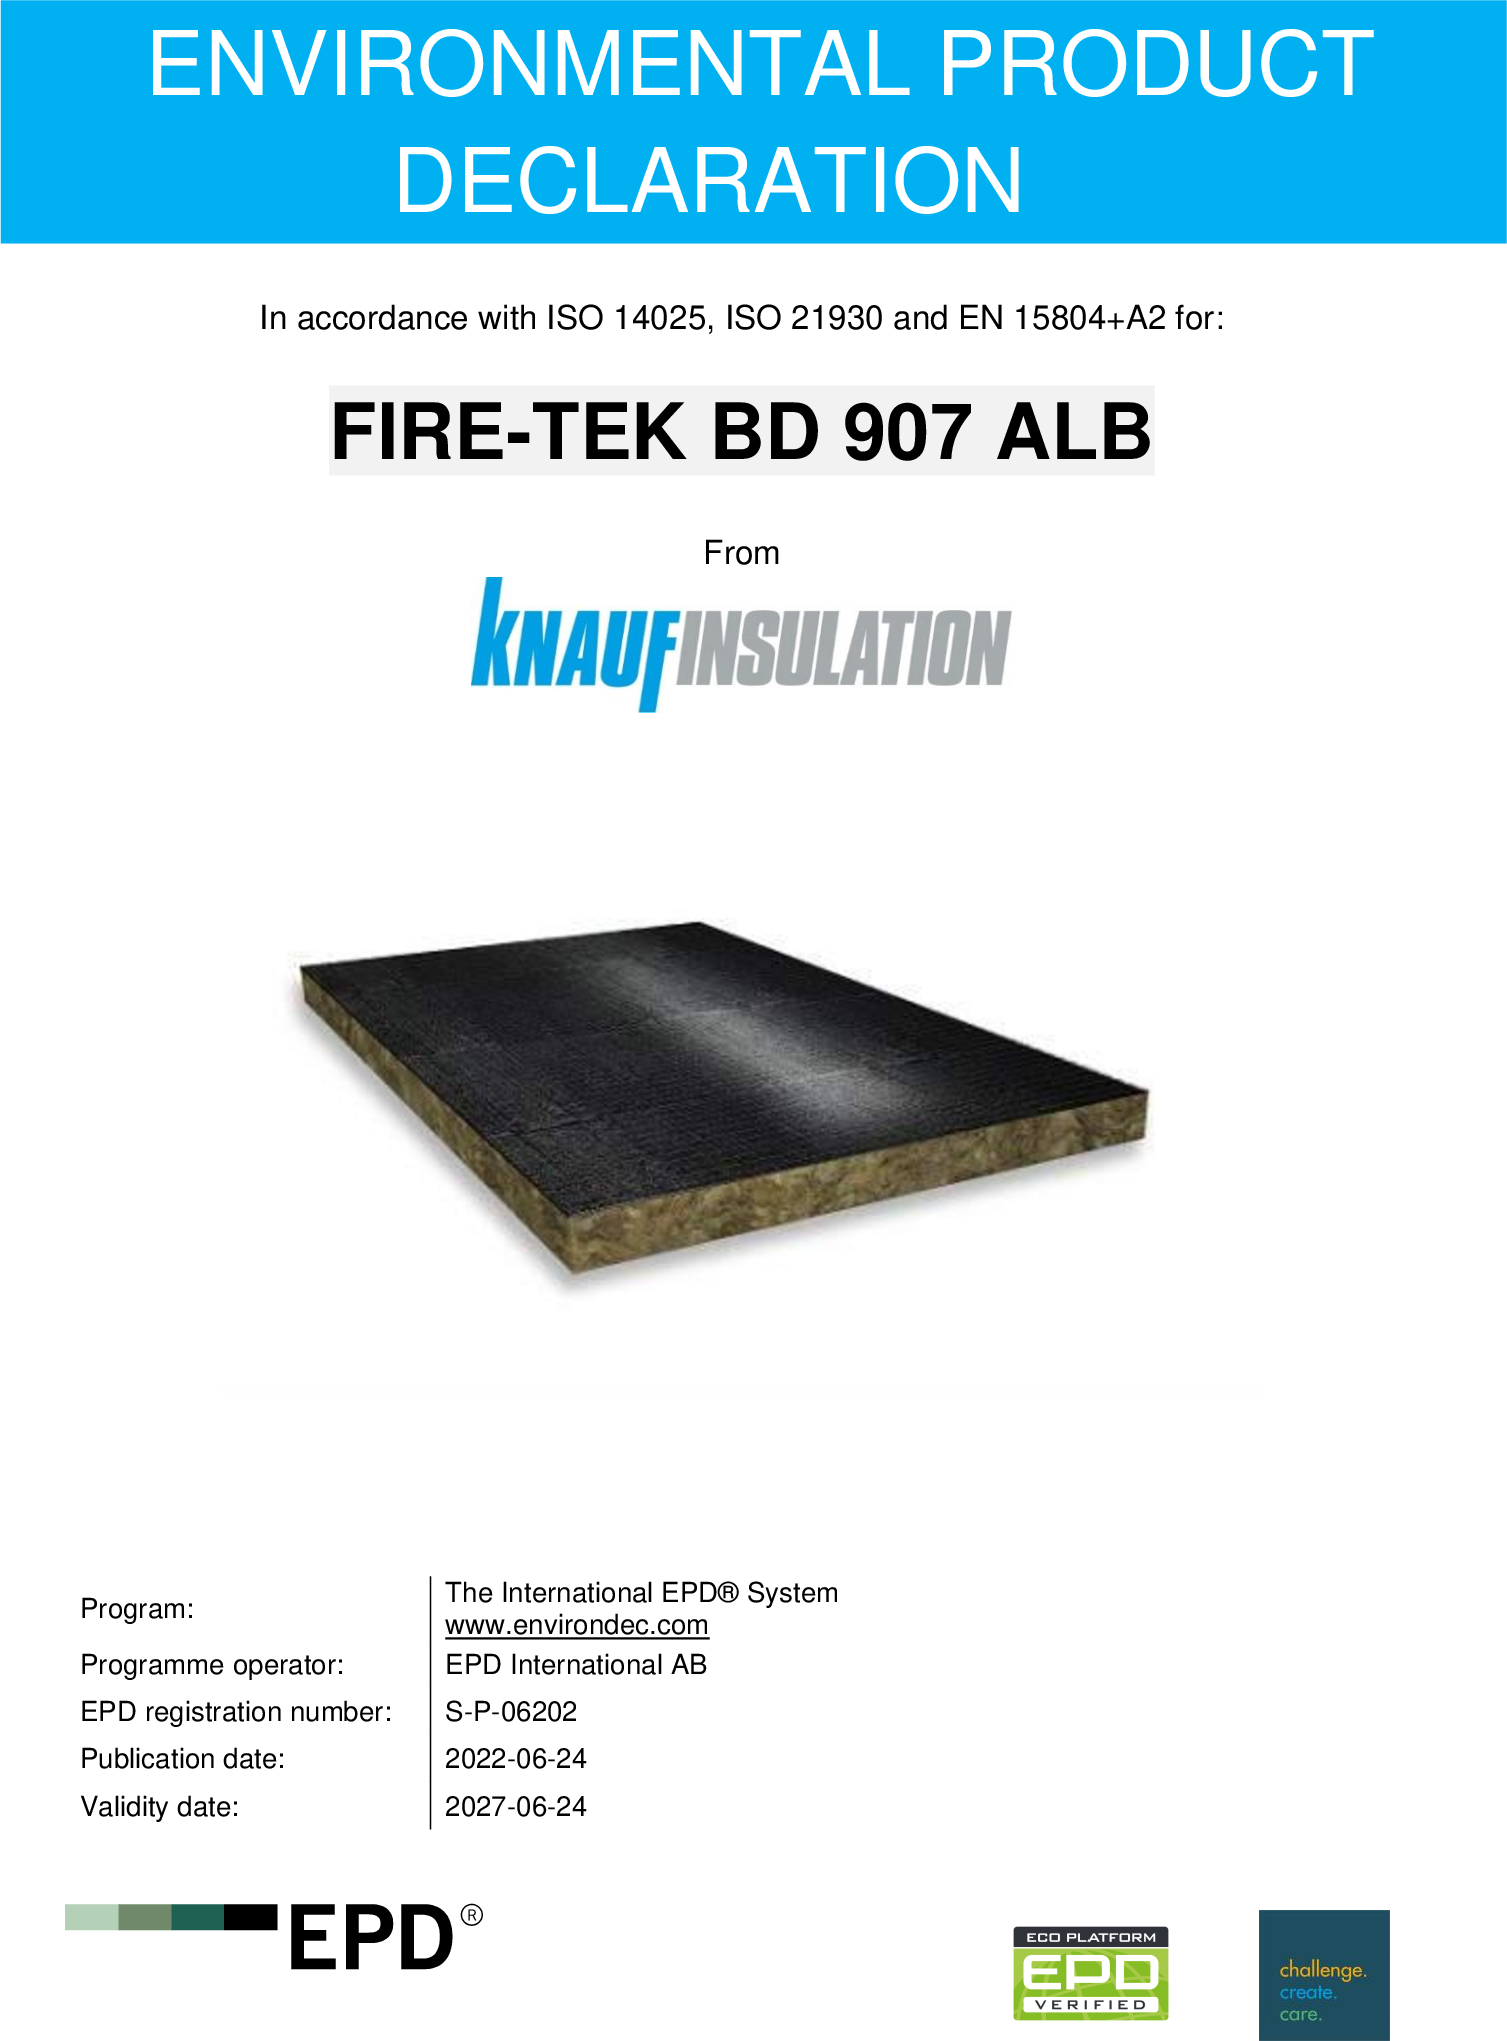 EPD Fire-teK_BD 907 ALB